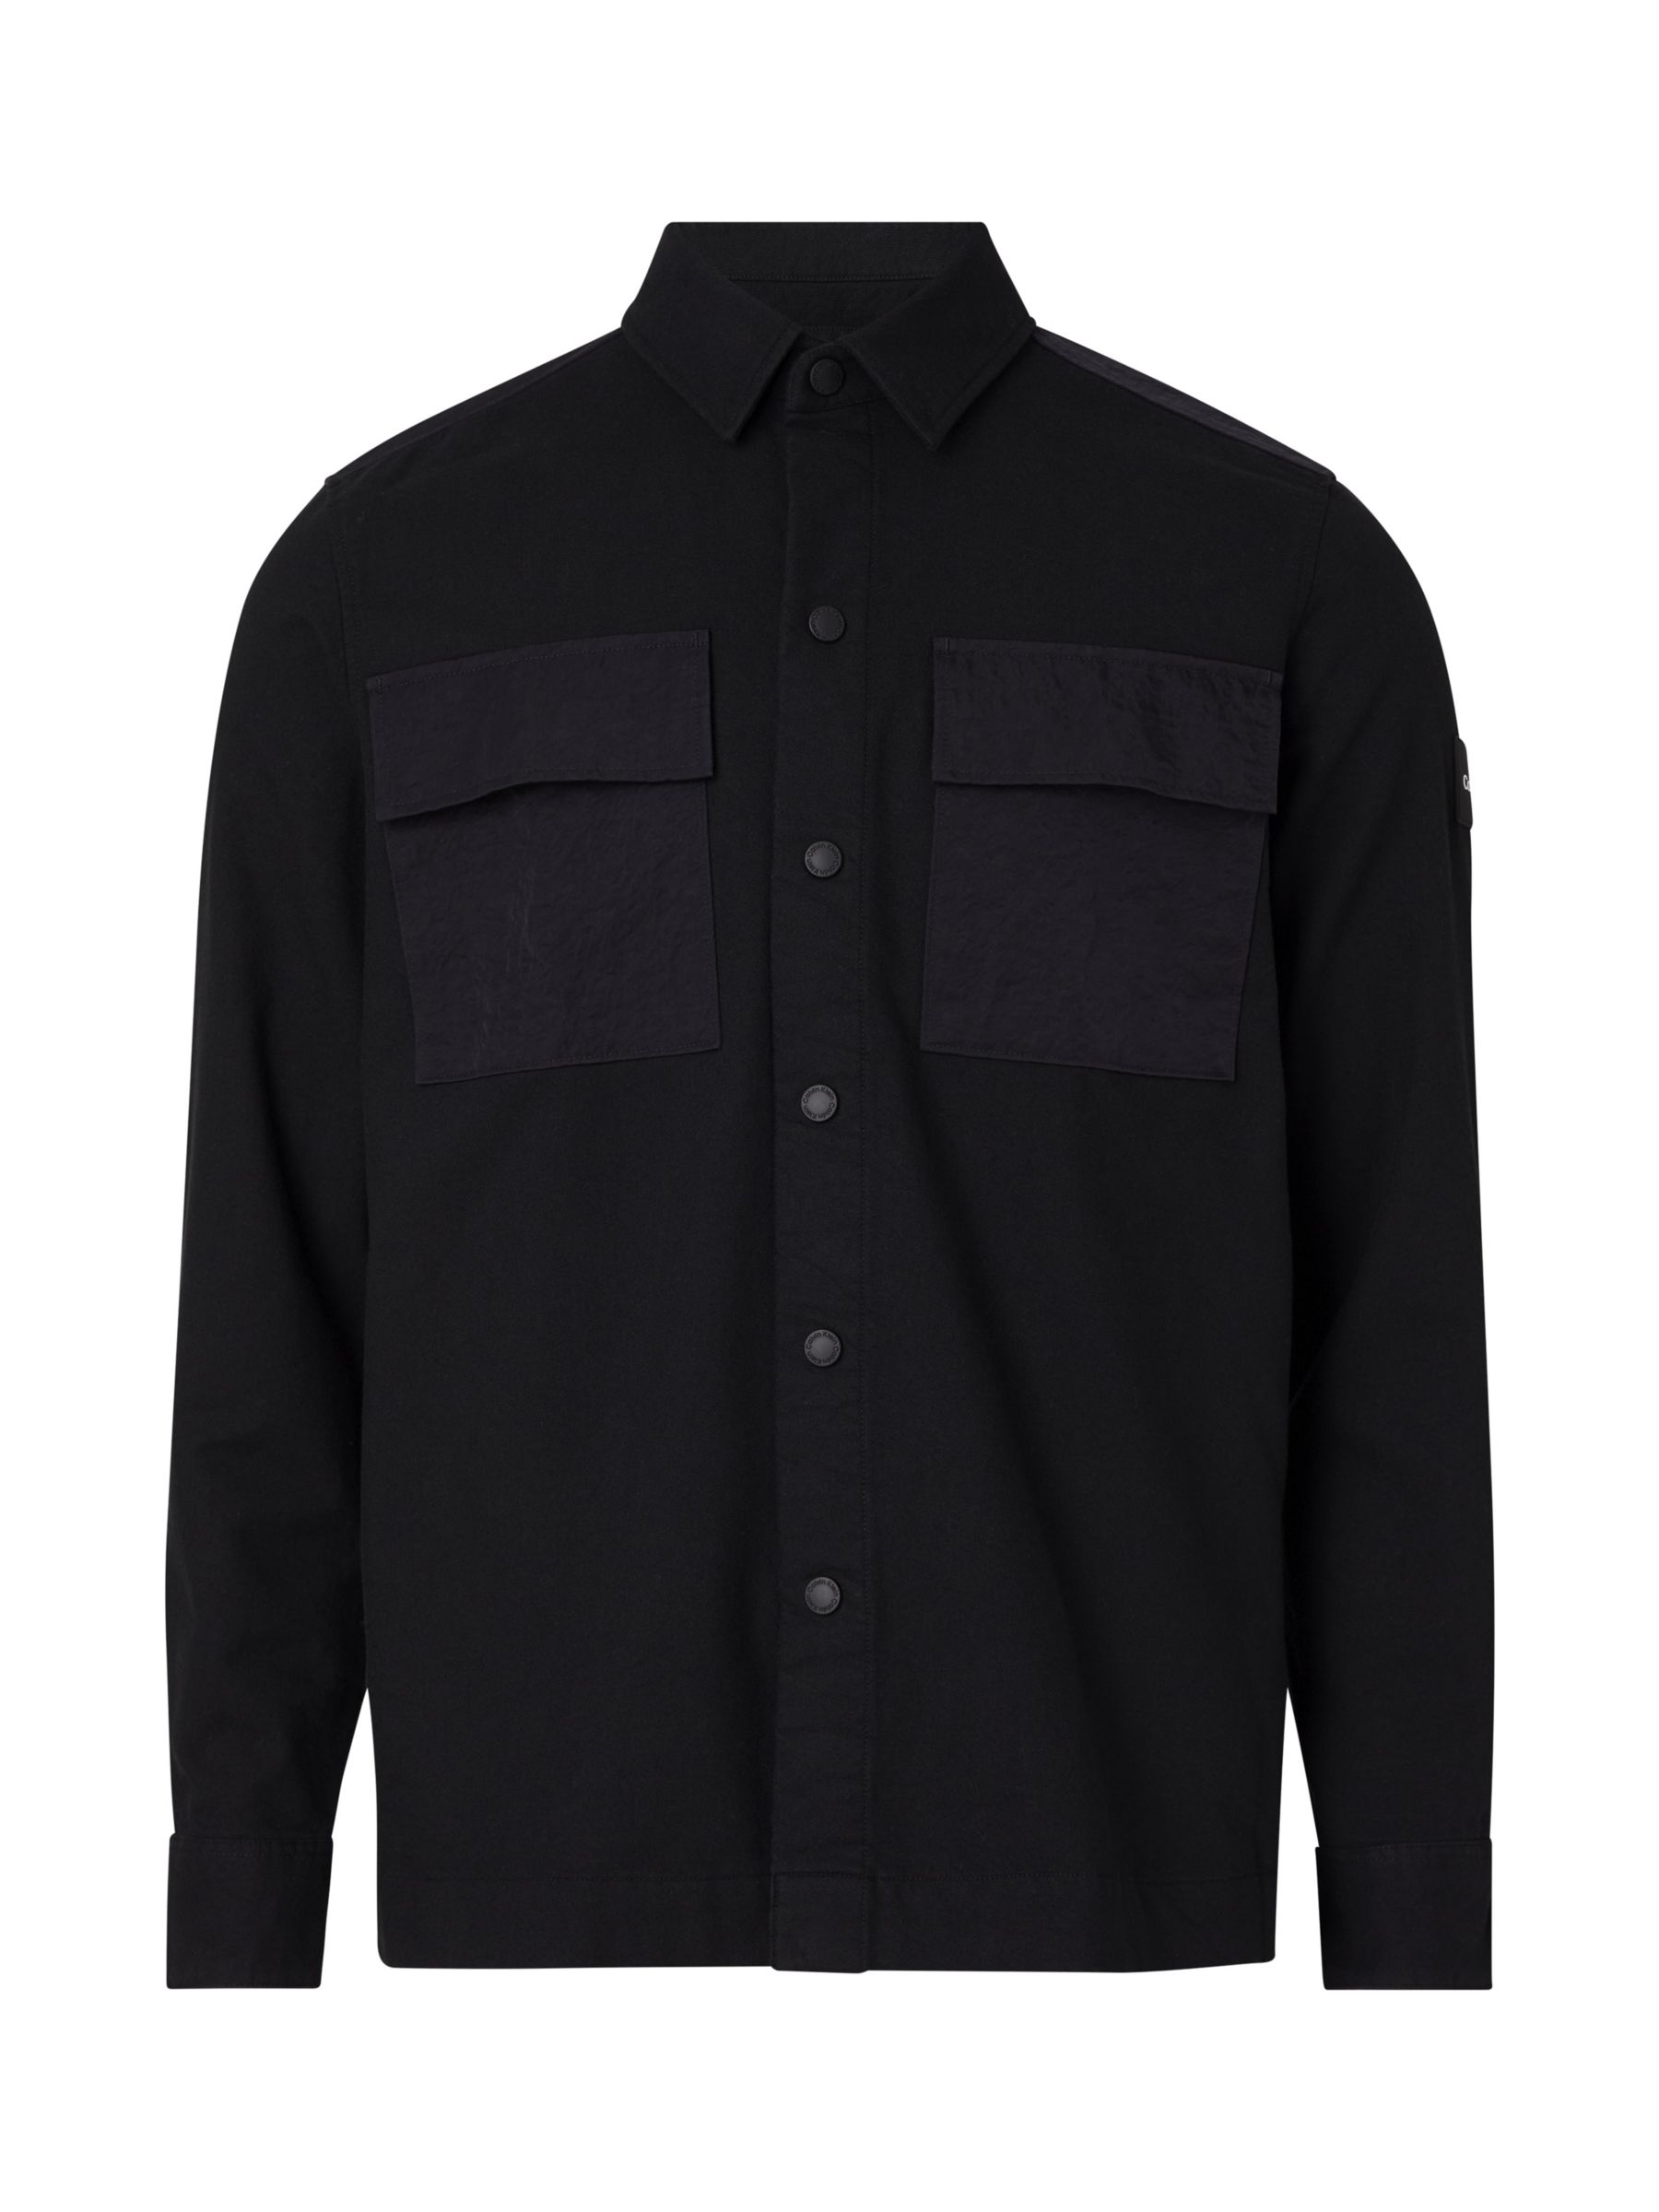 Calvin Klein Twill Overshirt, Ck Black at John Lewis & Partners